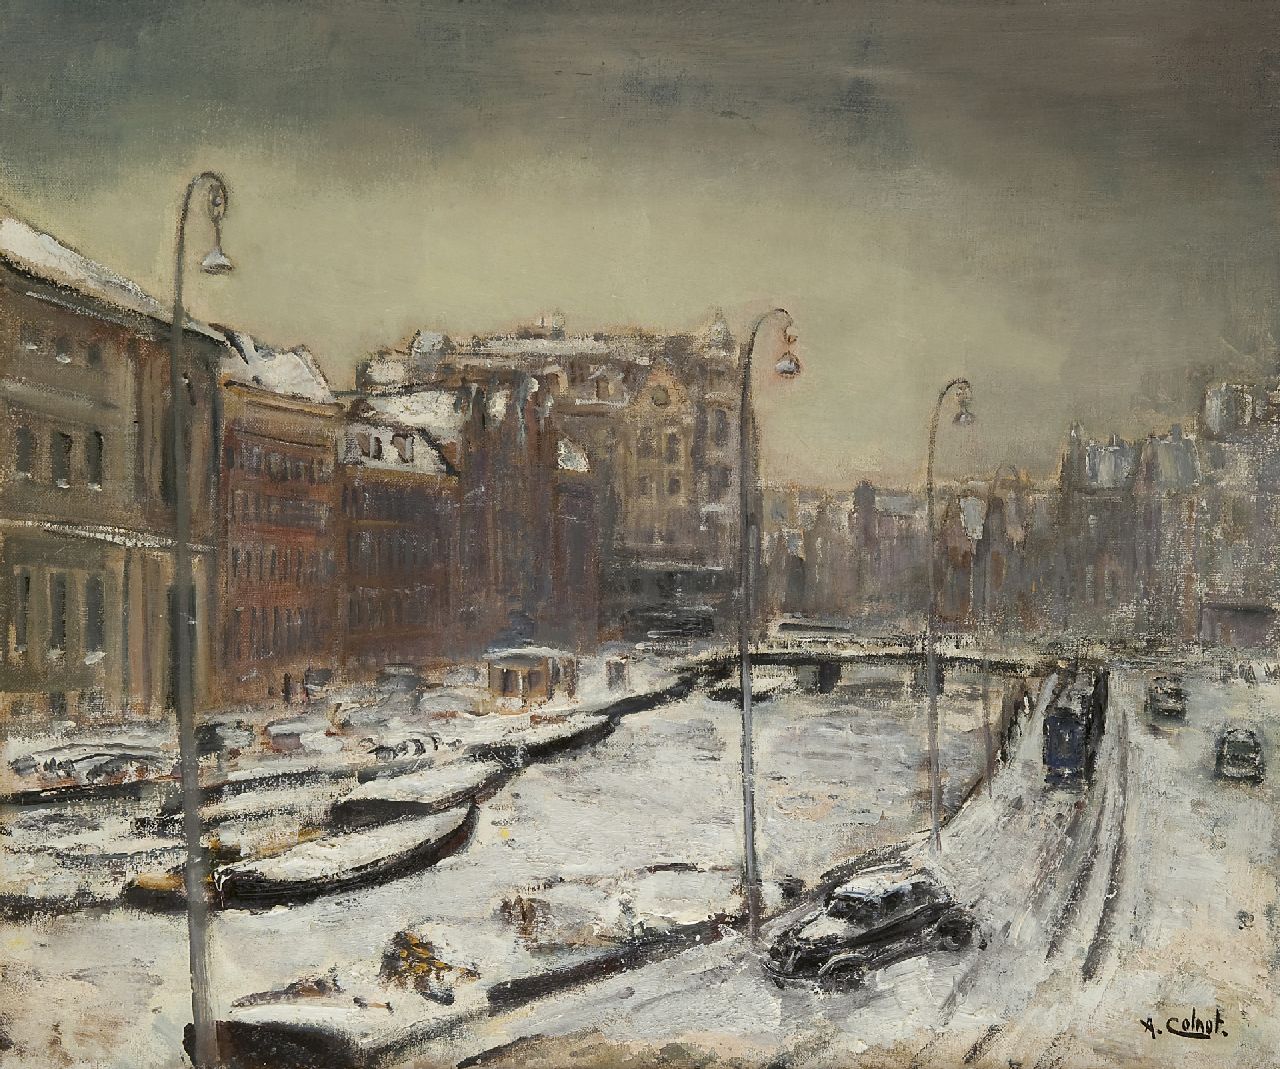 Colnot A.J.G.  | 'Arnout' Jacobus Gustaaf Colnot, Het Amsterdamse Rokin in de sneeuw, olieverf op doek 55,1 x 65,0 cm, gesigneerd rechtsonder